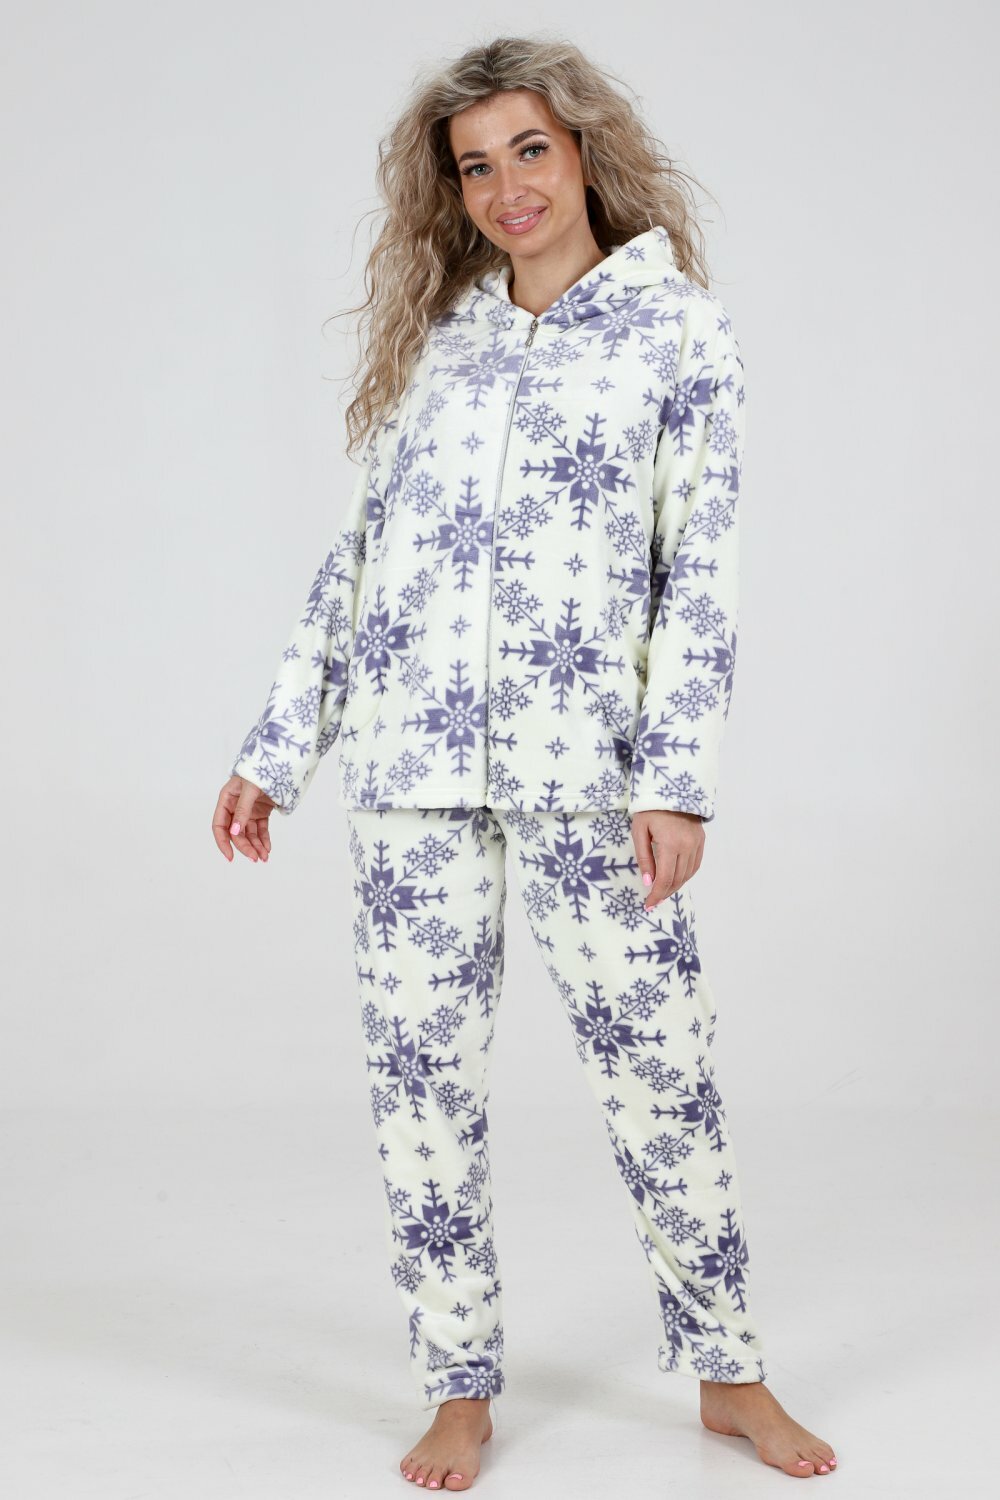 Пижама Aronia, размер 54-56, белый, серый - фотография № 1